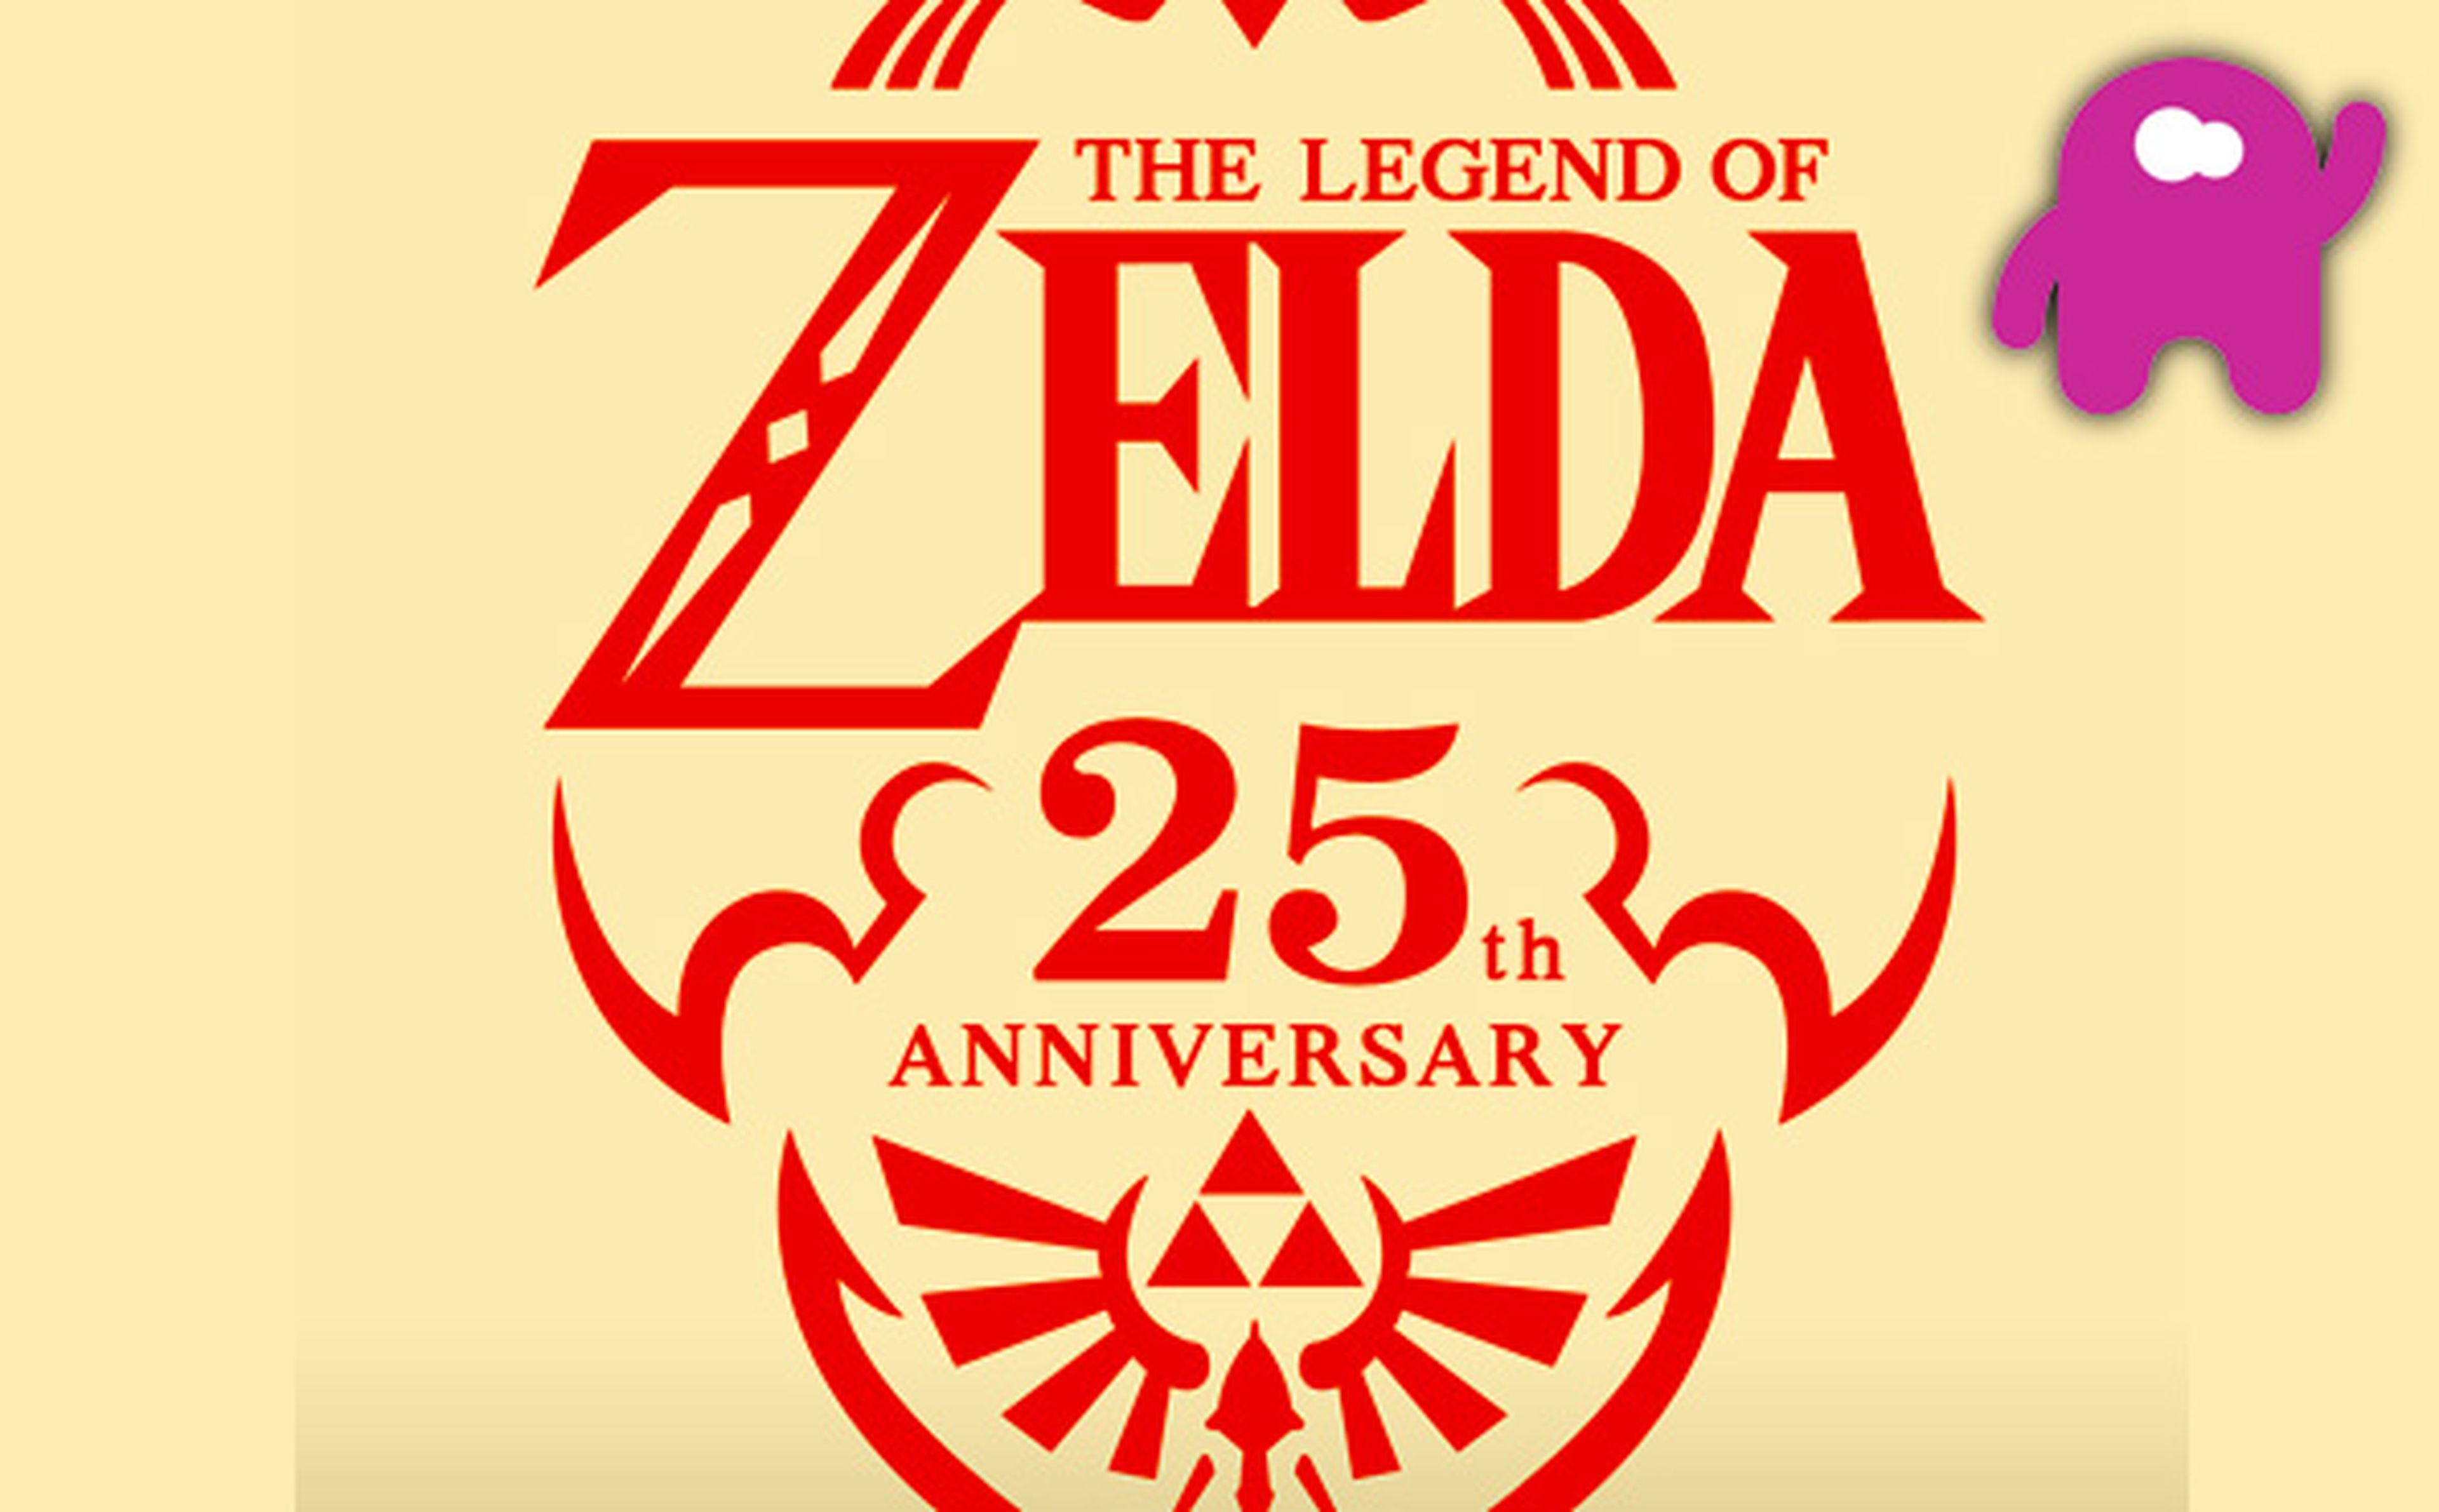 GAMEFEST: Celebra el aniversario de Zelda